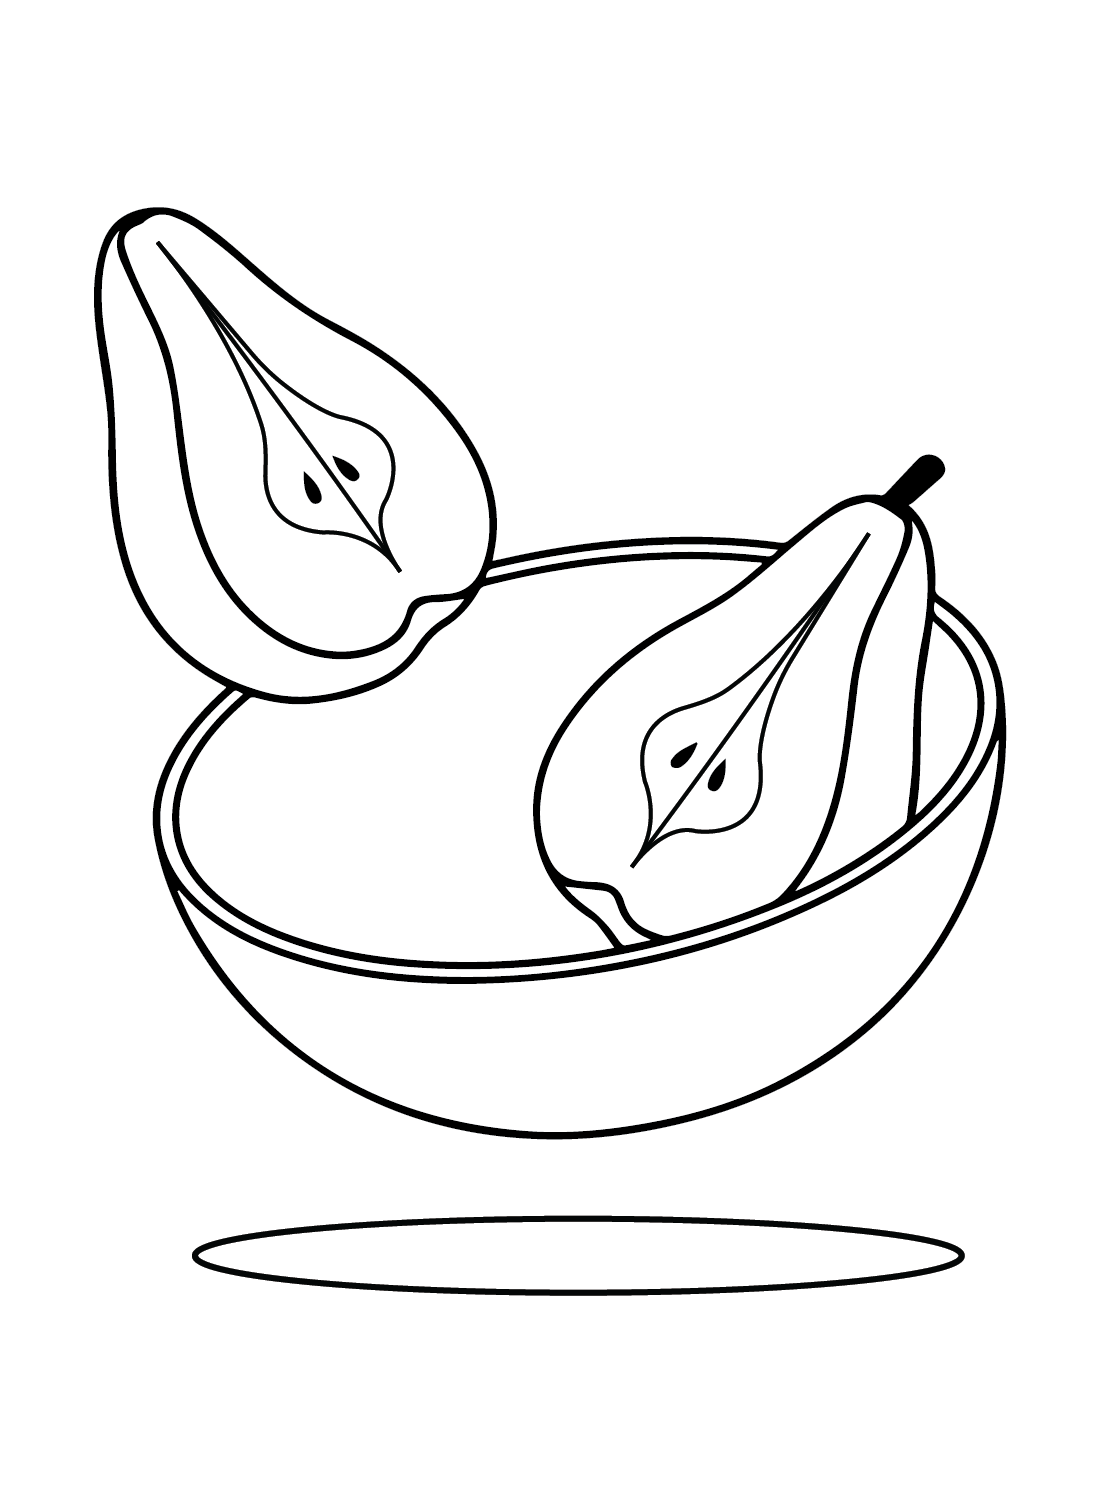 Dibujar peras a partir de peras